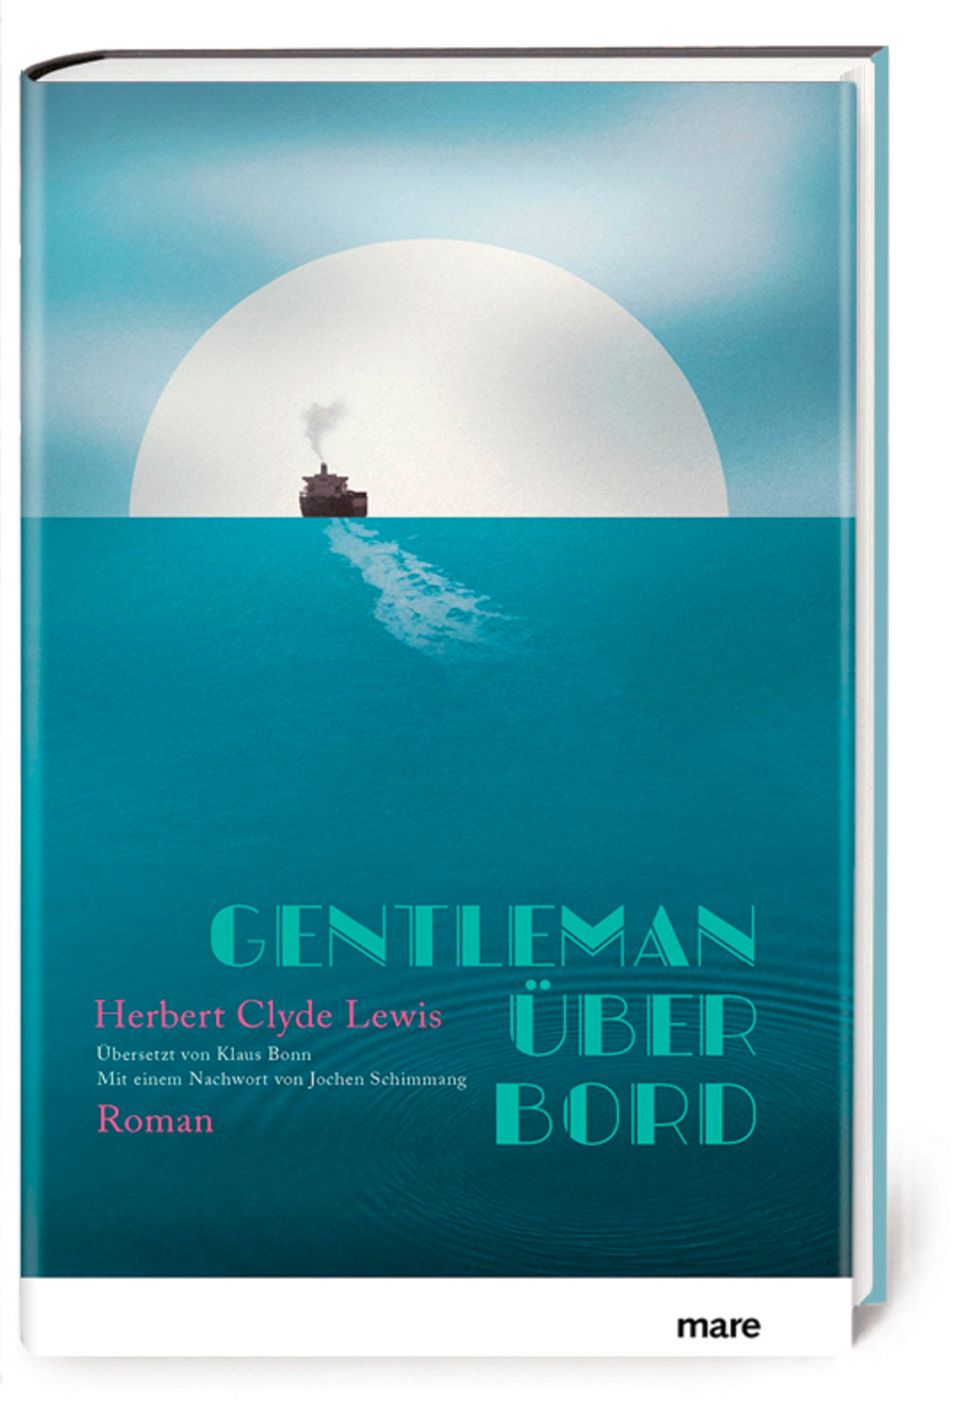 Buchcover "Gentleman über Bord" von Herbert Clyde Lewis